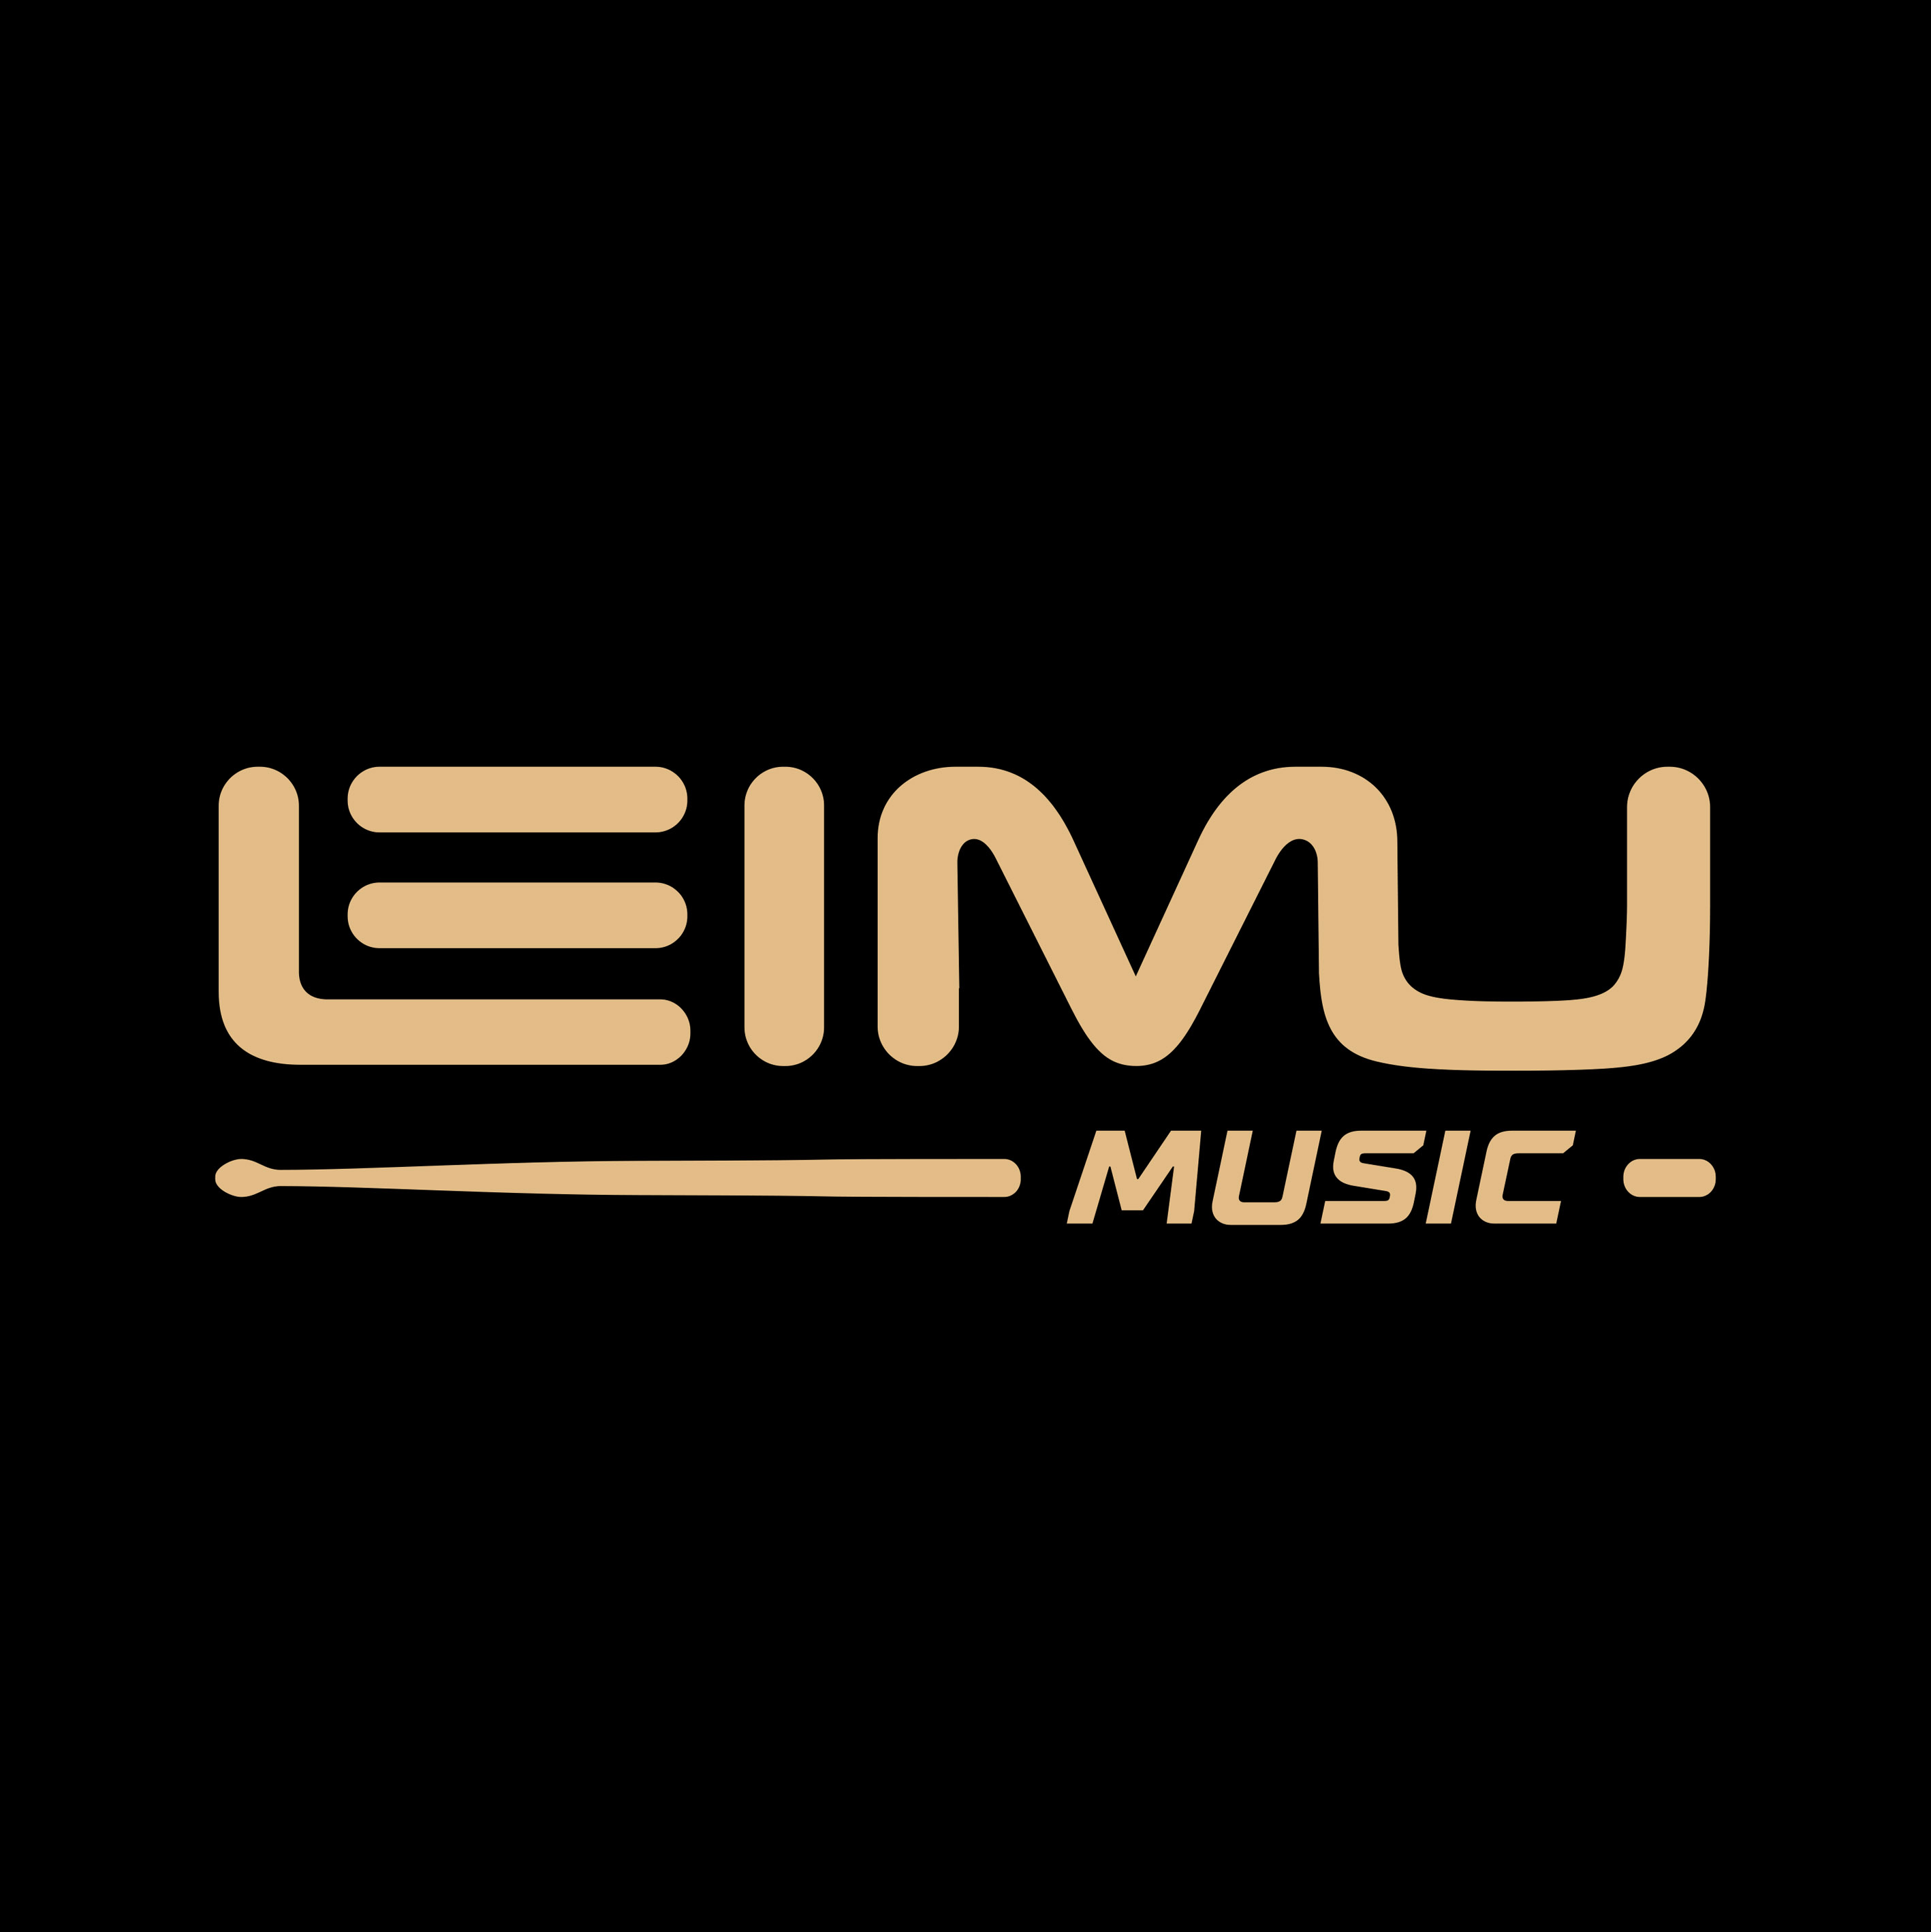 Logo, Leimu Music, made by Therwiz Design